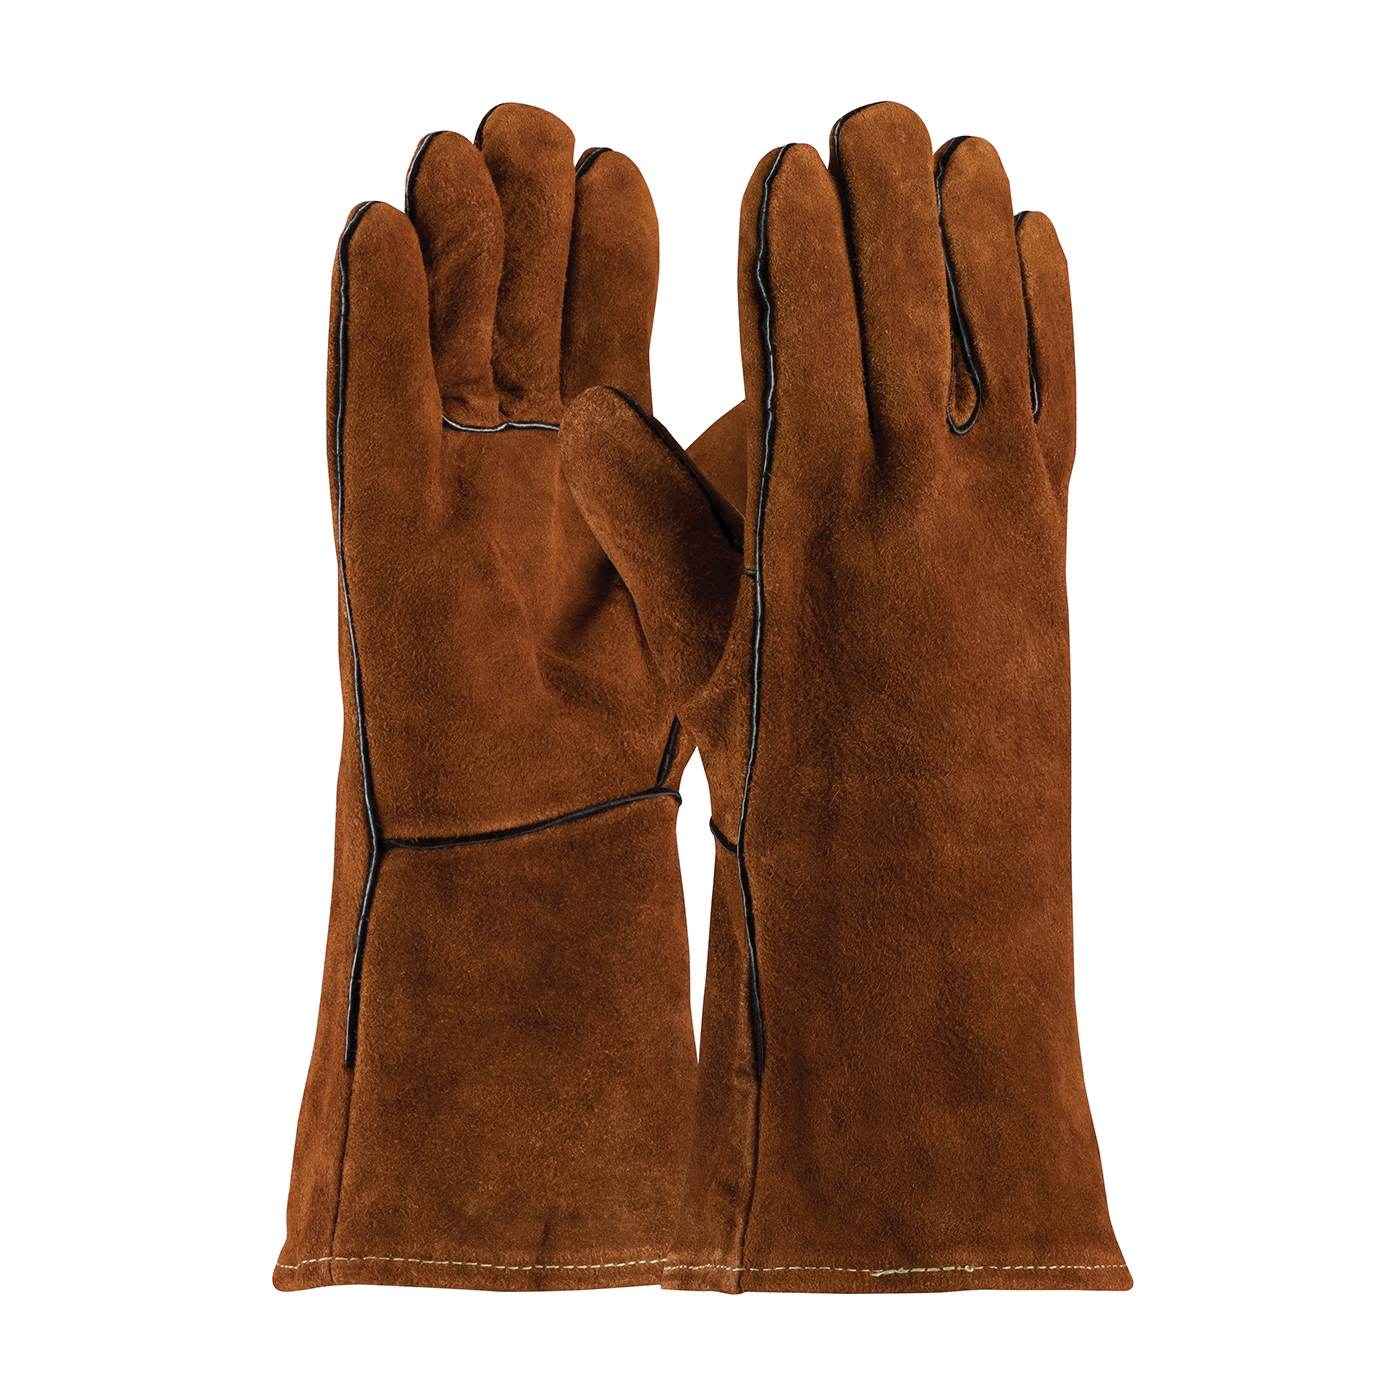 PIP® 73-7088 Men's Shoulder Grade Welding Gloves, L, Split Cowhide Leather, Brown, Cotton/Foam Lining, Full Leather Gauntlet Cuff, 13-1/2 in L, 1.2 mm THK Glove Material